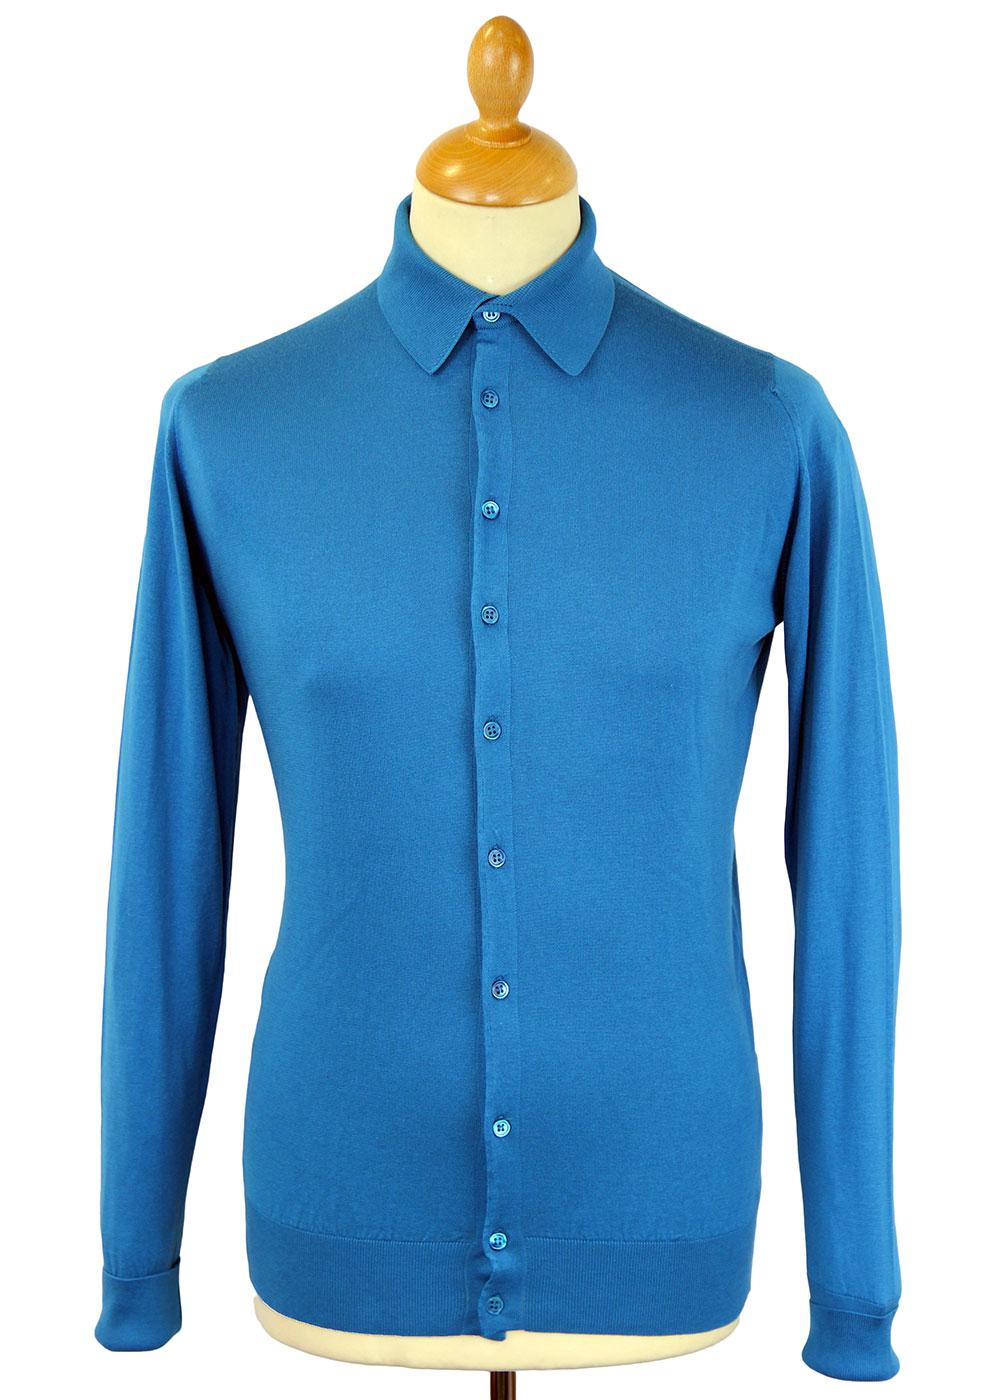 Seth JOHN SMEDLEY Retro Mod Knitted Cotton Shirt T